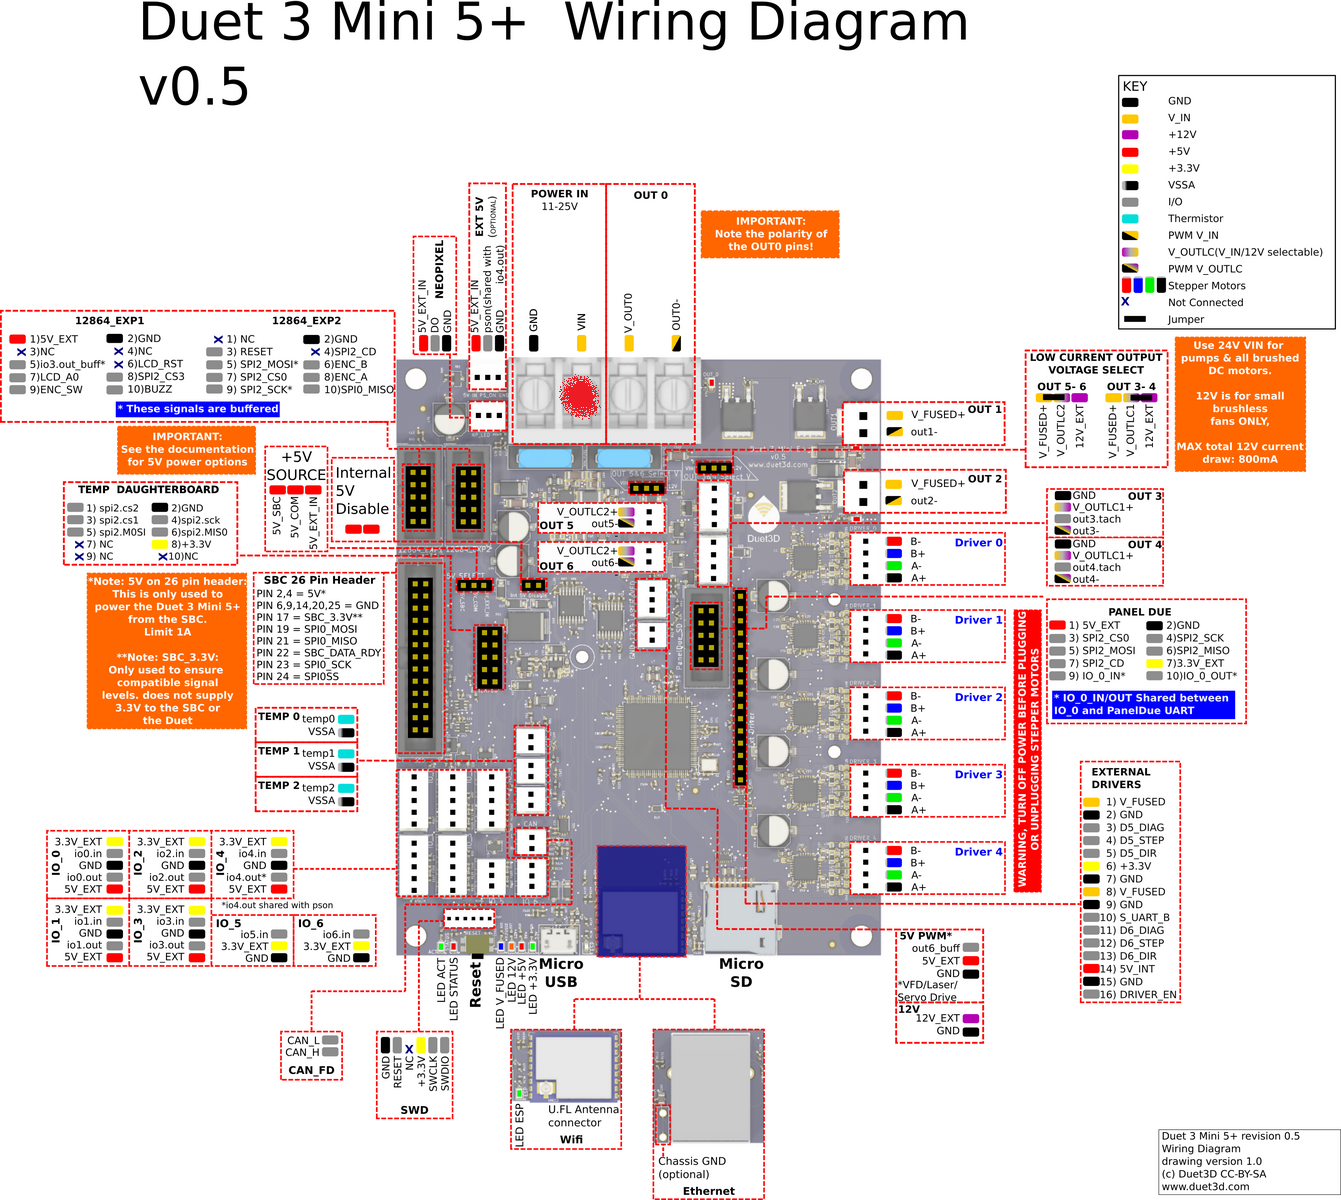 duet3_mini5_wiring.png